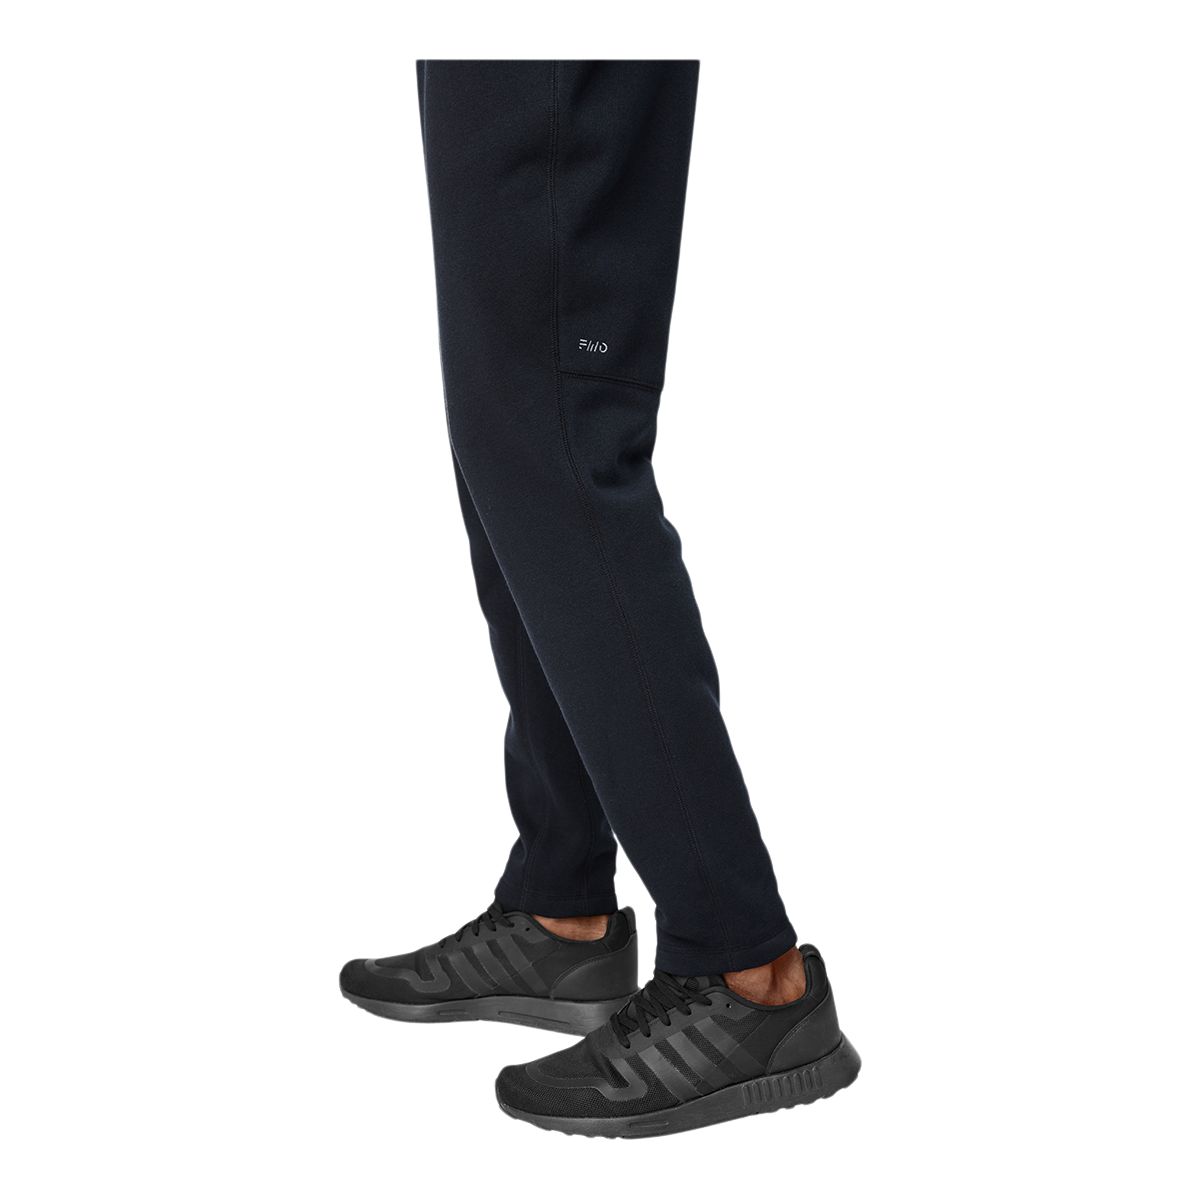 Lazer Men's Ankle-Length Twill Jogger Pants, Sizes S-XL, Athletic Fit